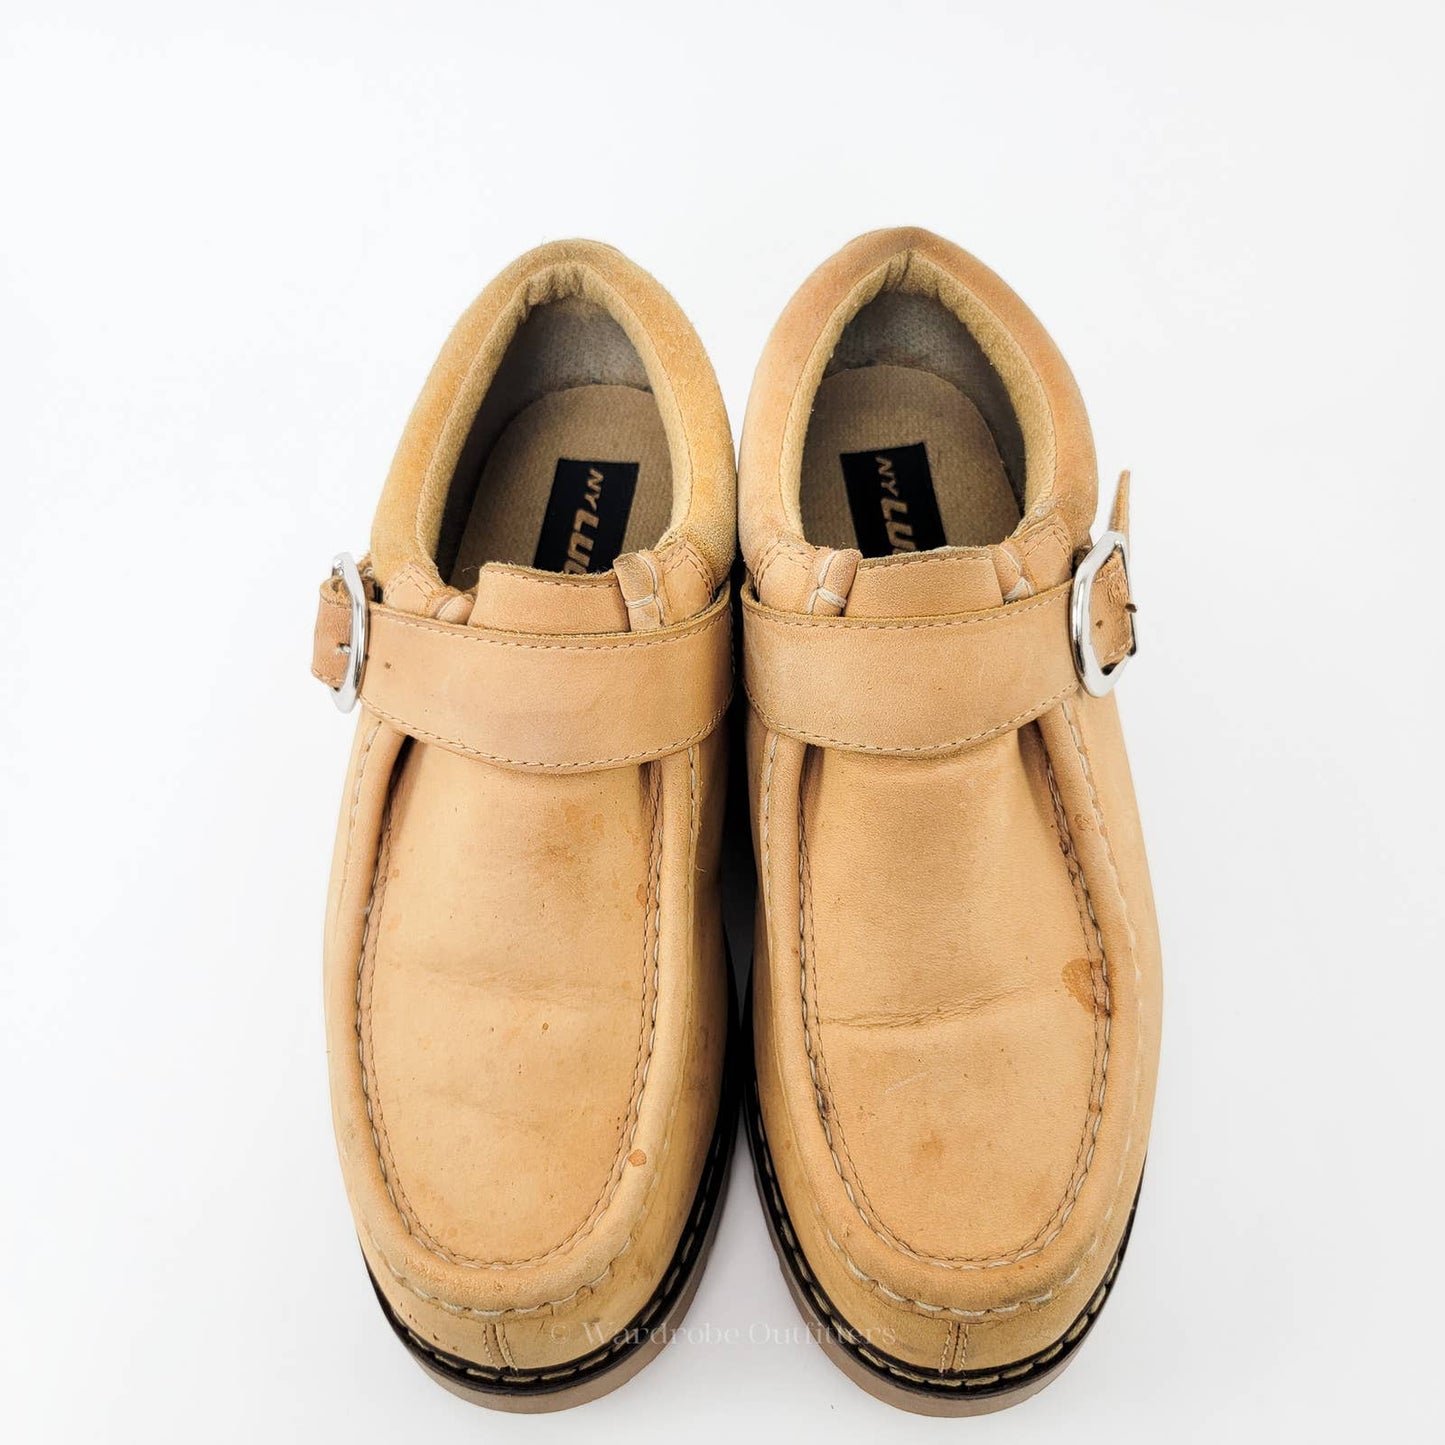 Vintage 90s LUGZ Moc Toe Ankle Wallabee Boots